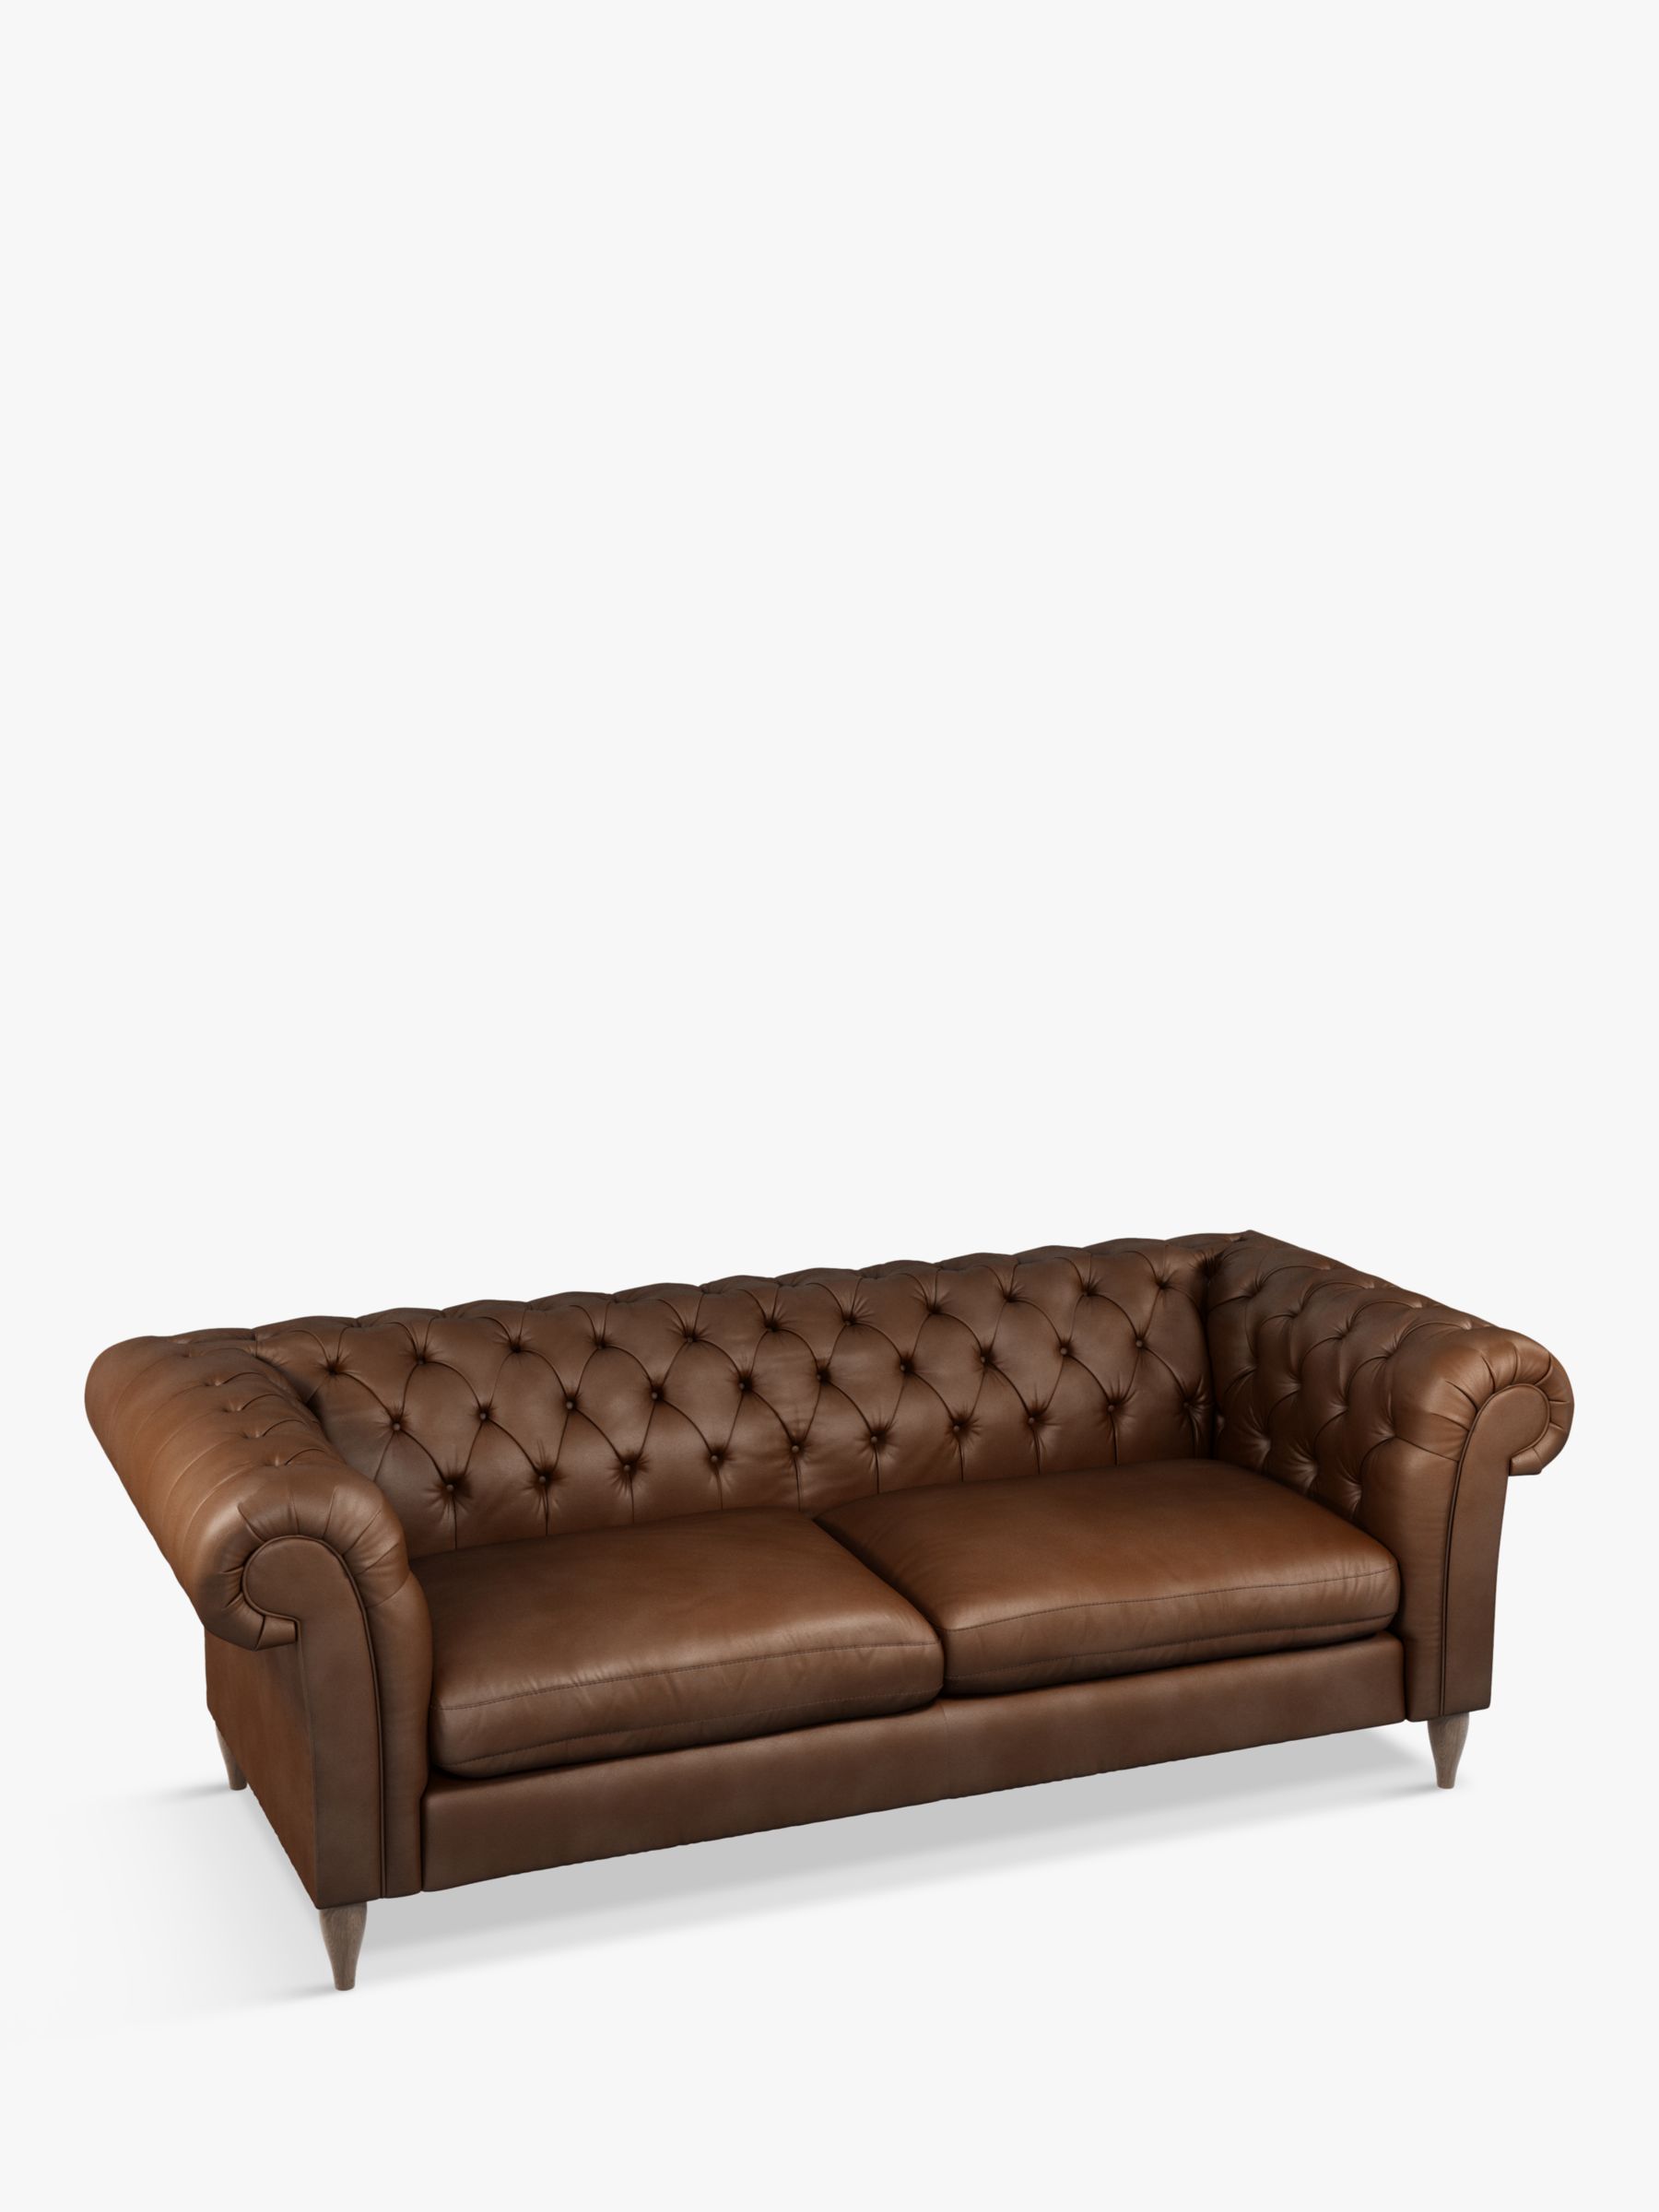 Photo of John lewis cromwell chesterfield grand 4 seater leather sofa dark leg